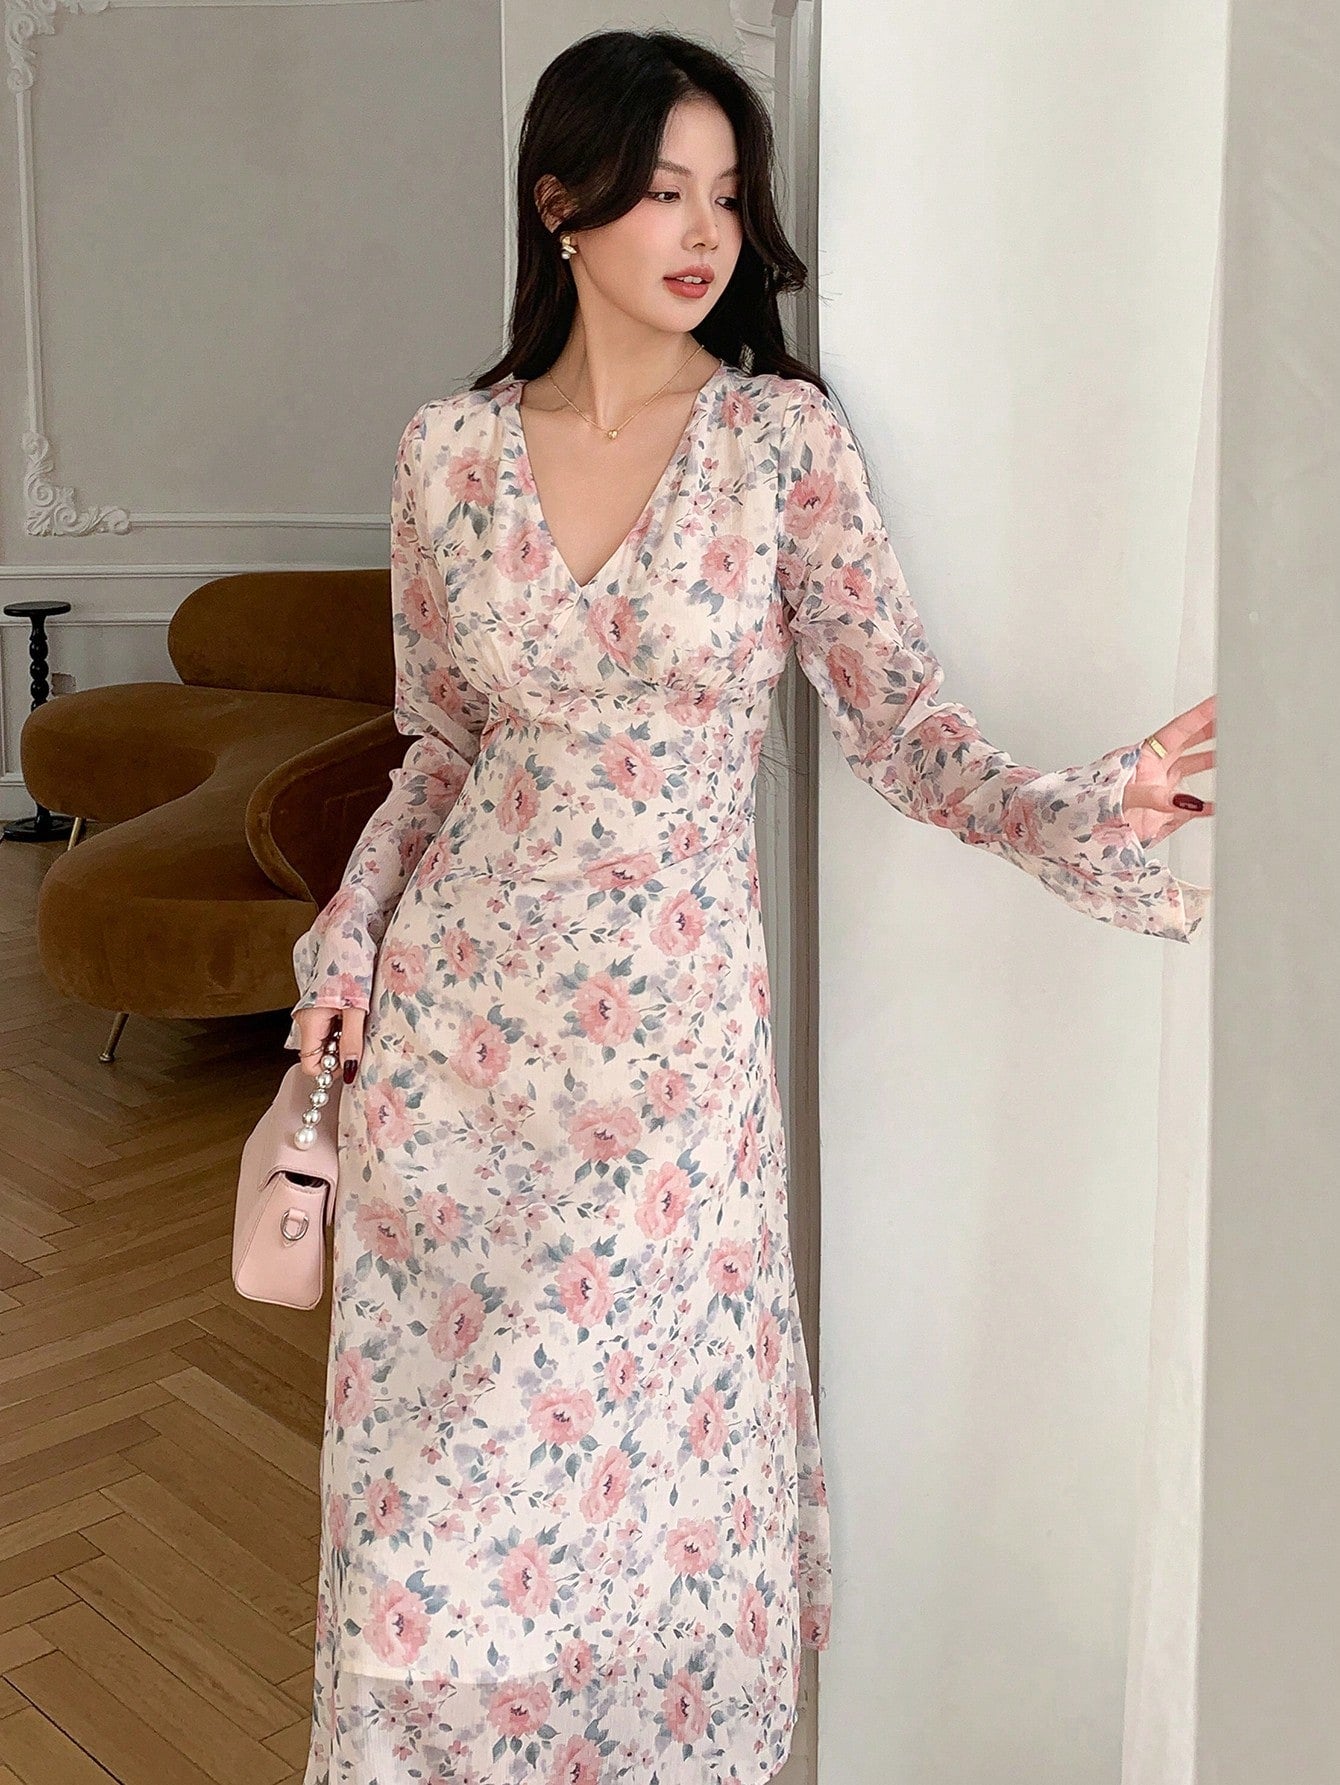 Women's Spring/Summer Elegant Floral Print Long Flared Sleeve Long Dress